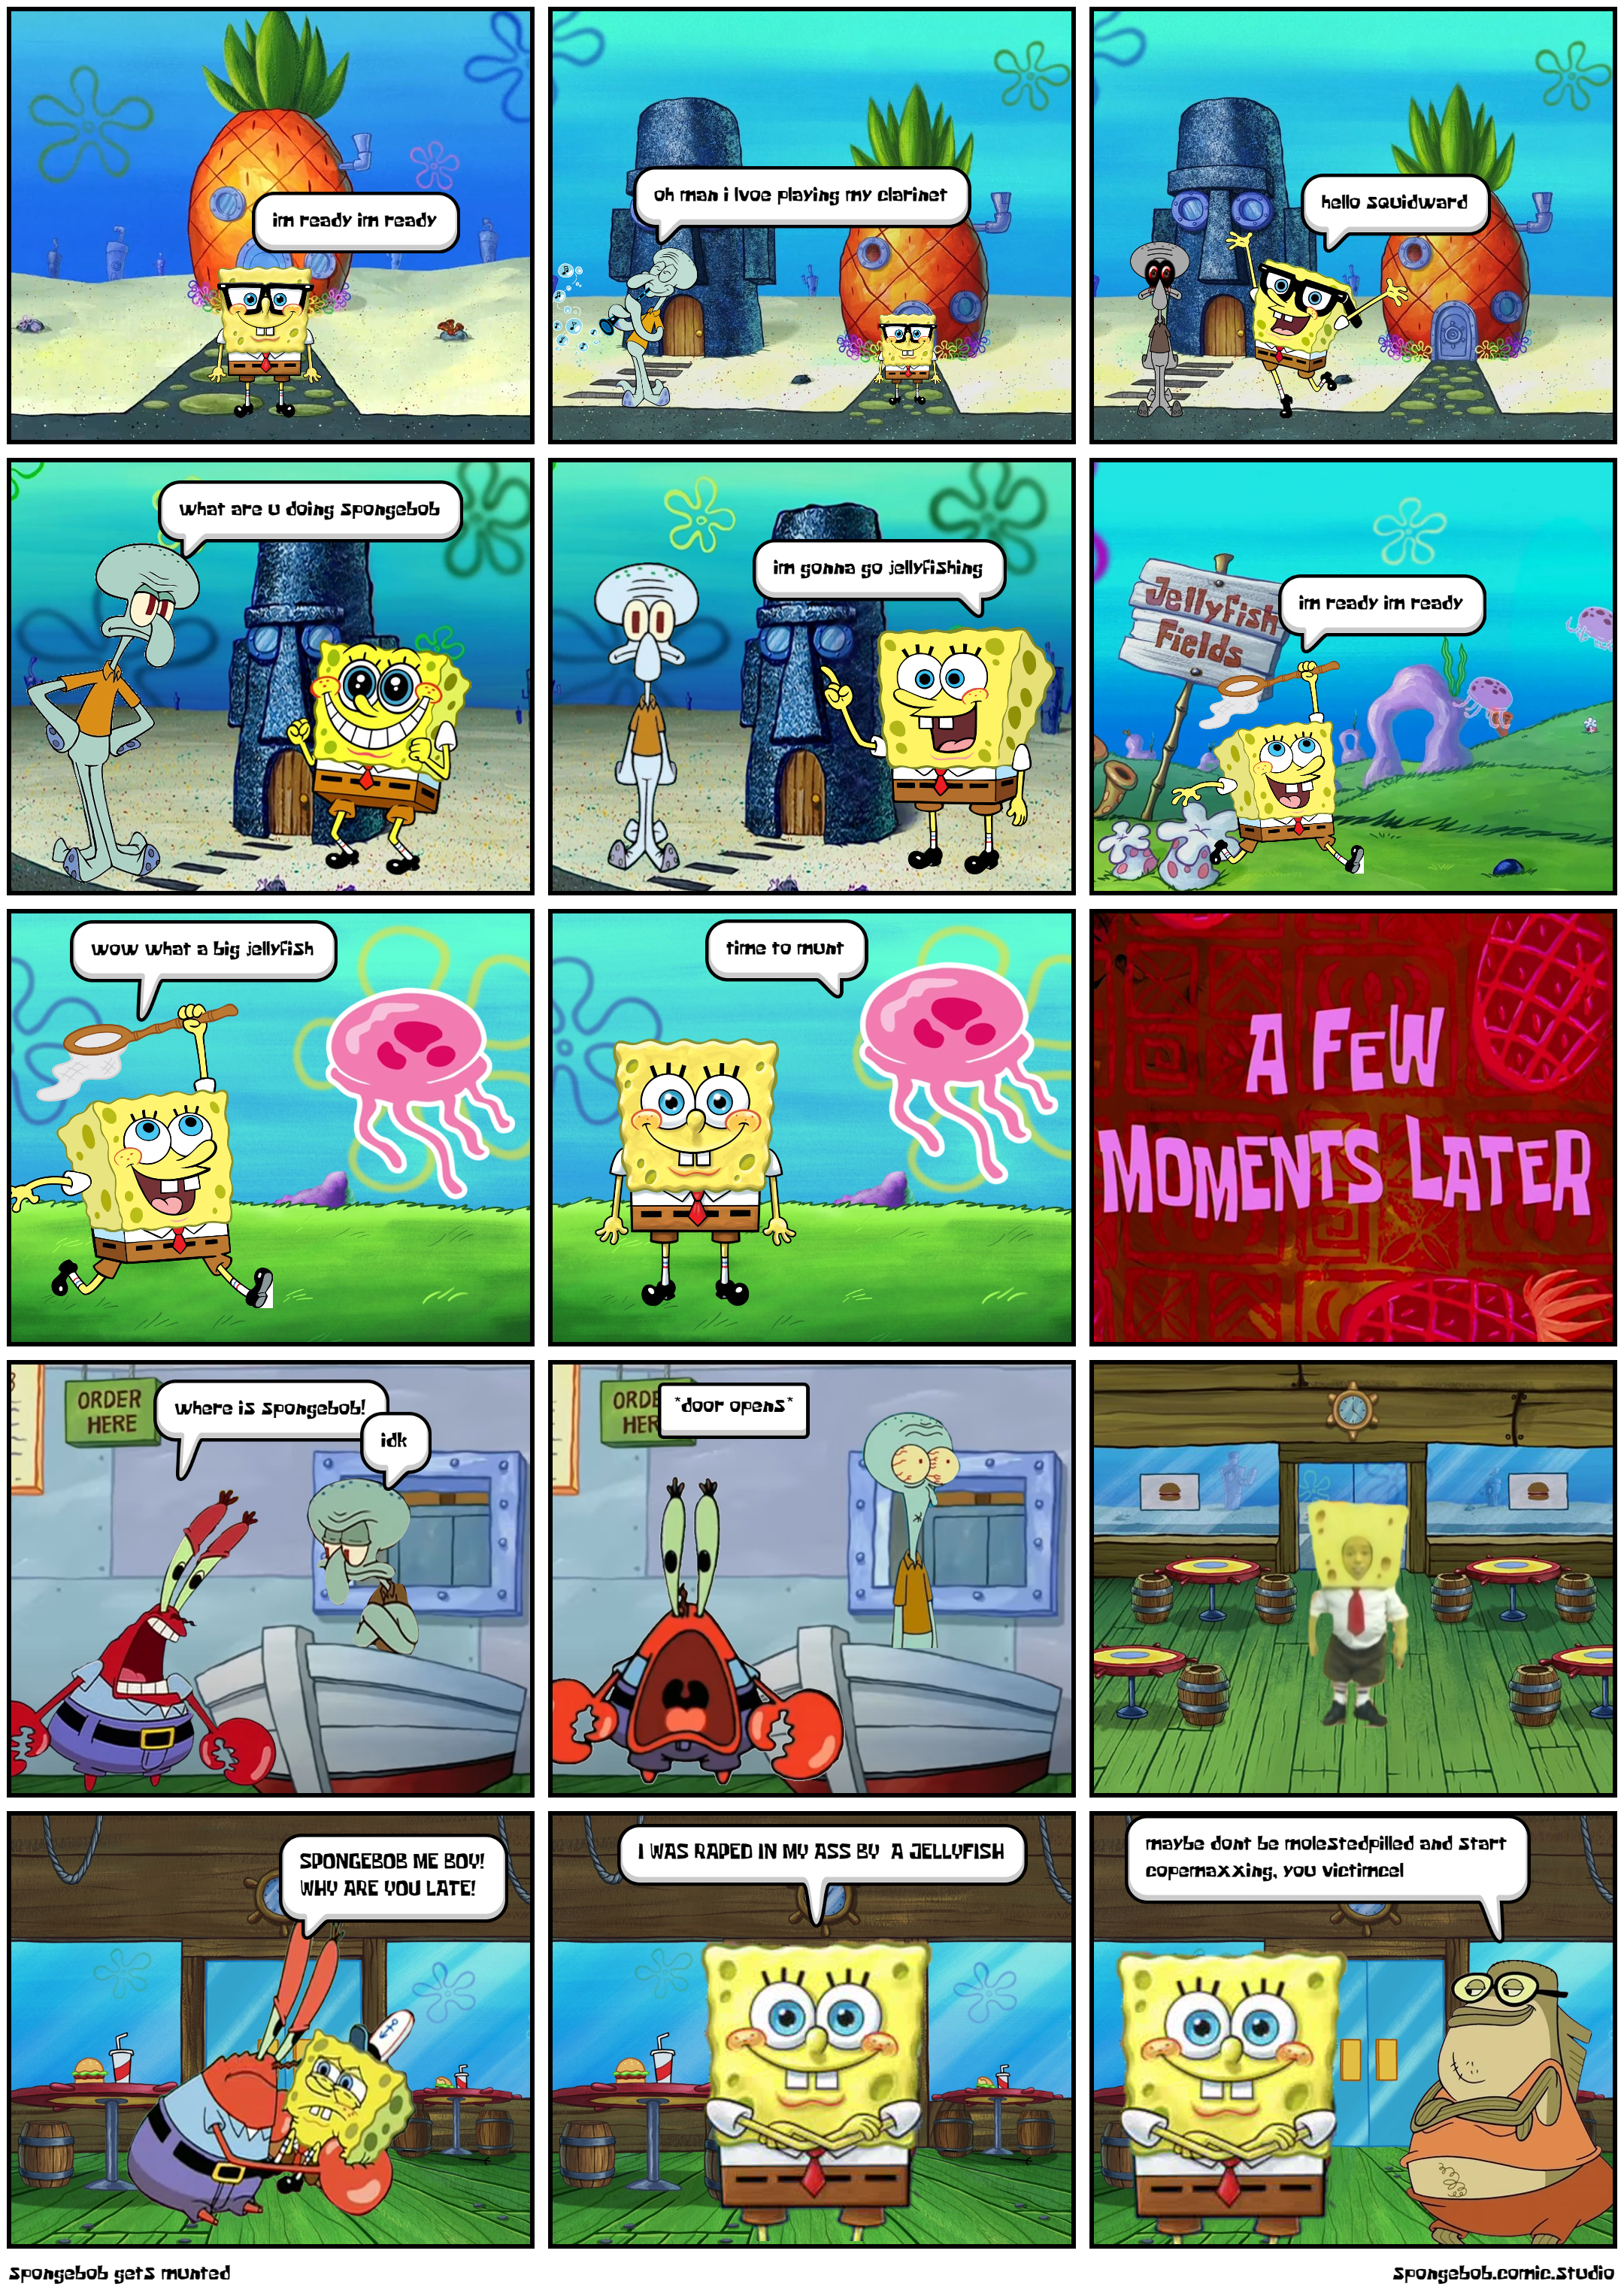 spongebob gets munted